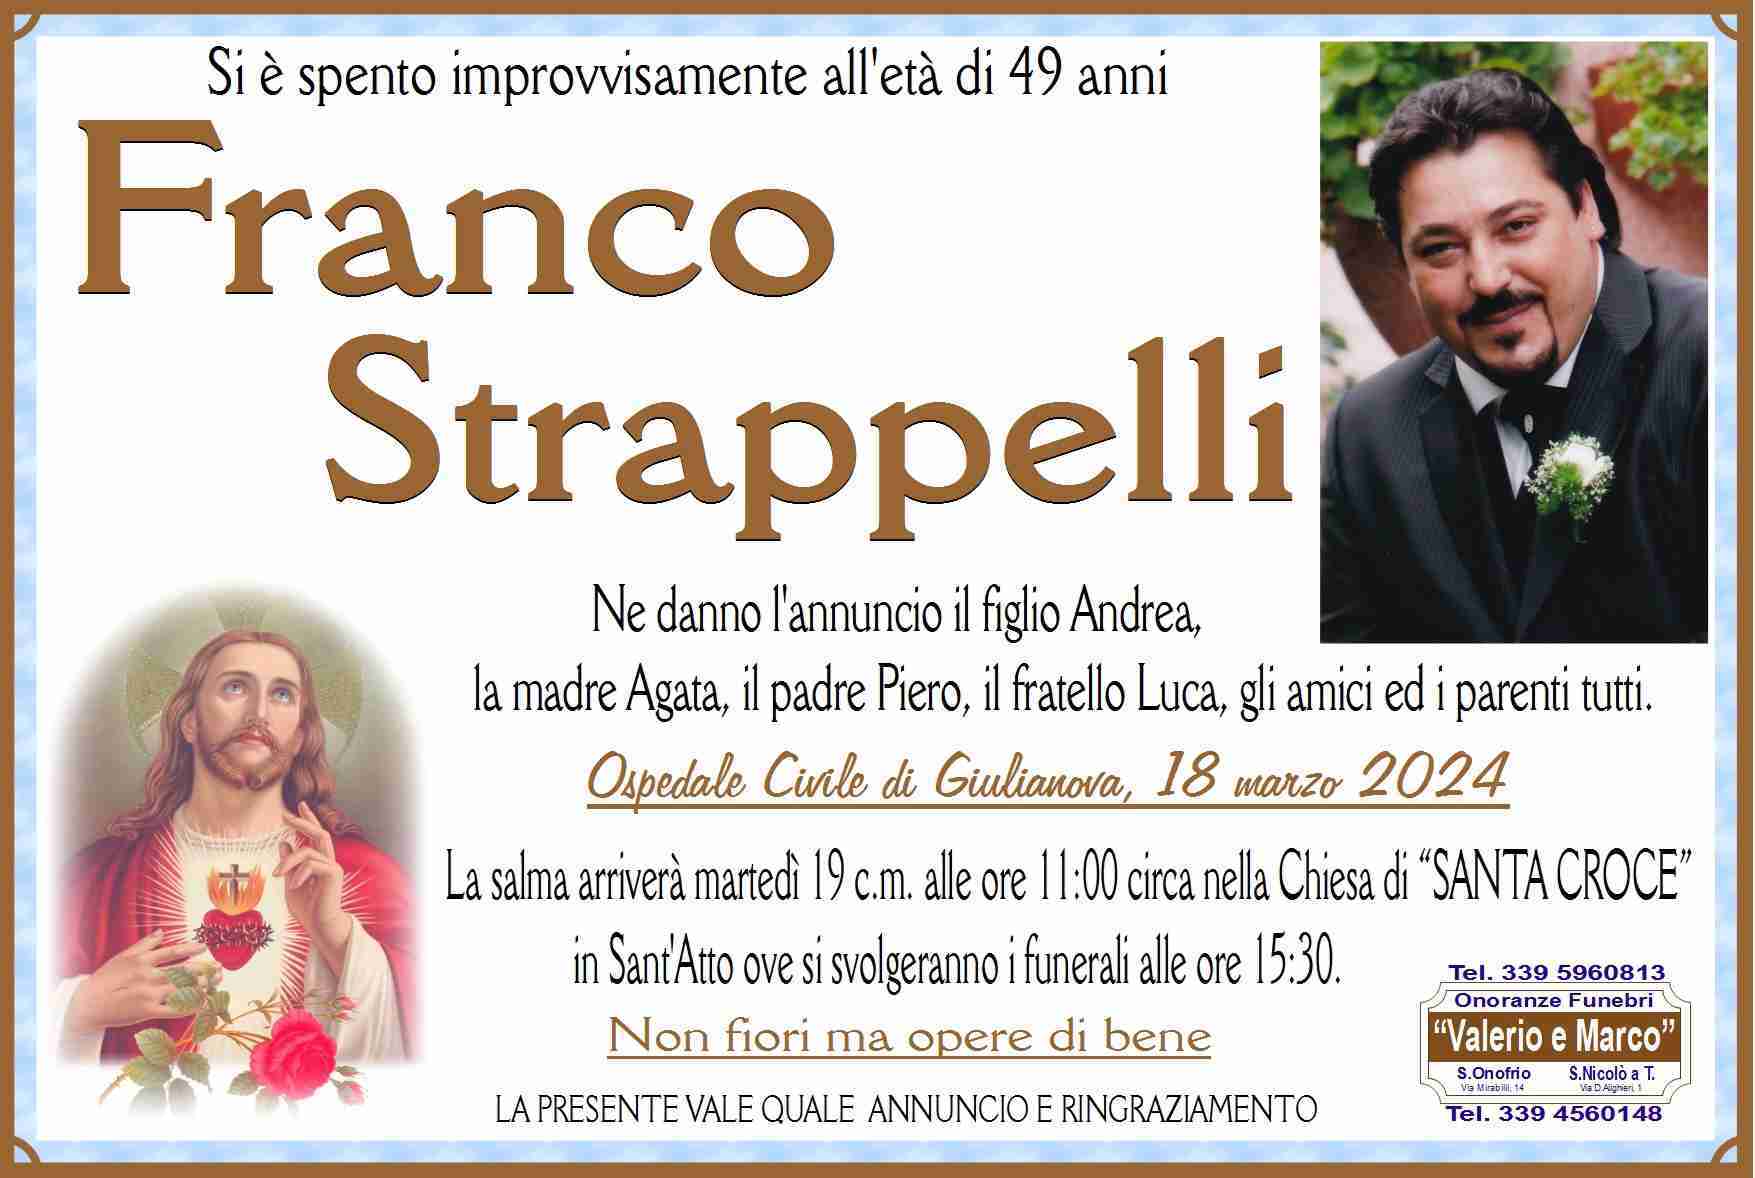 Franco Strappelli